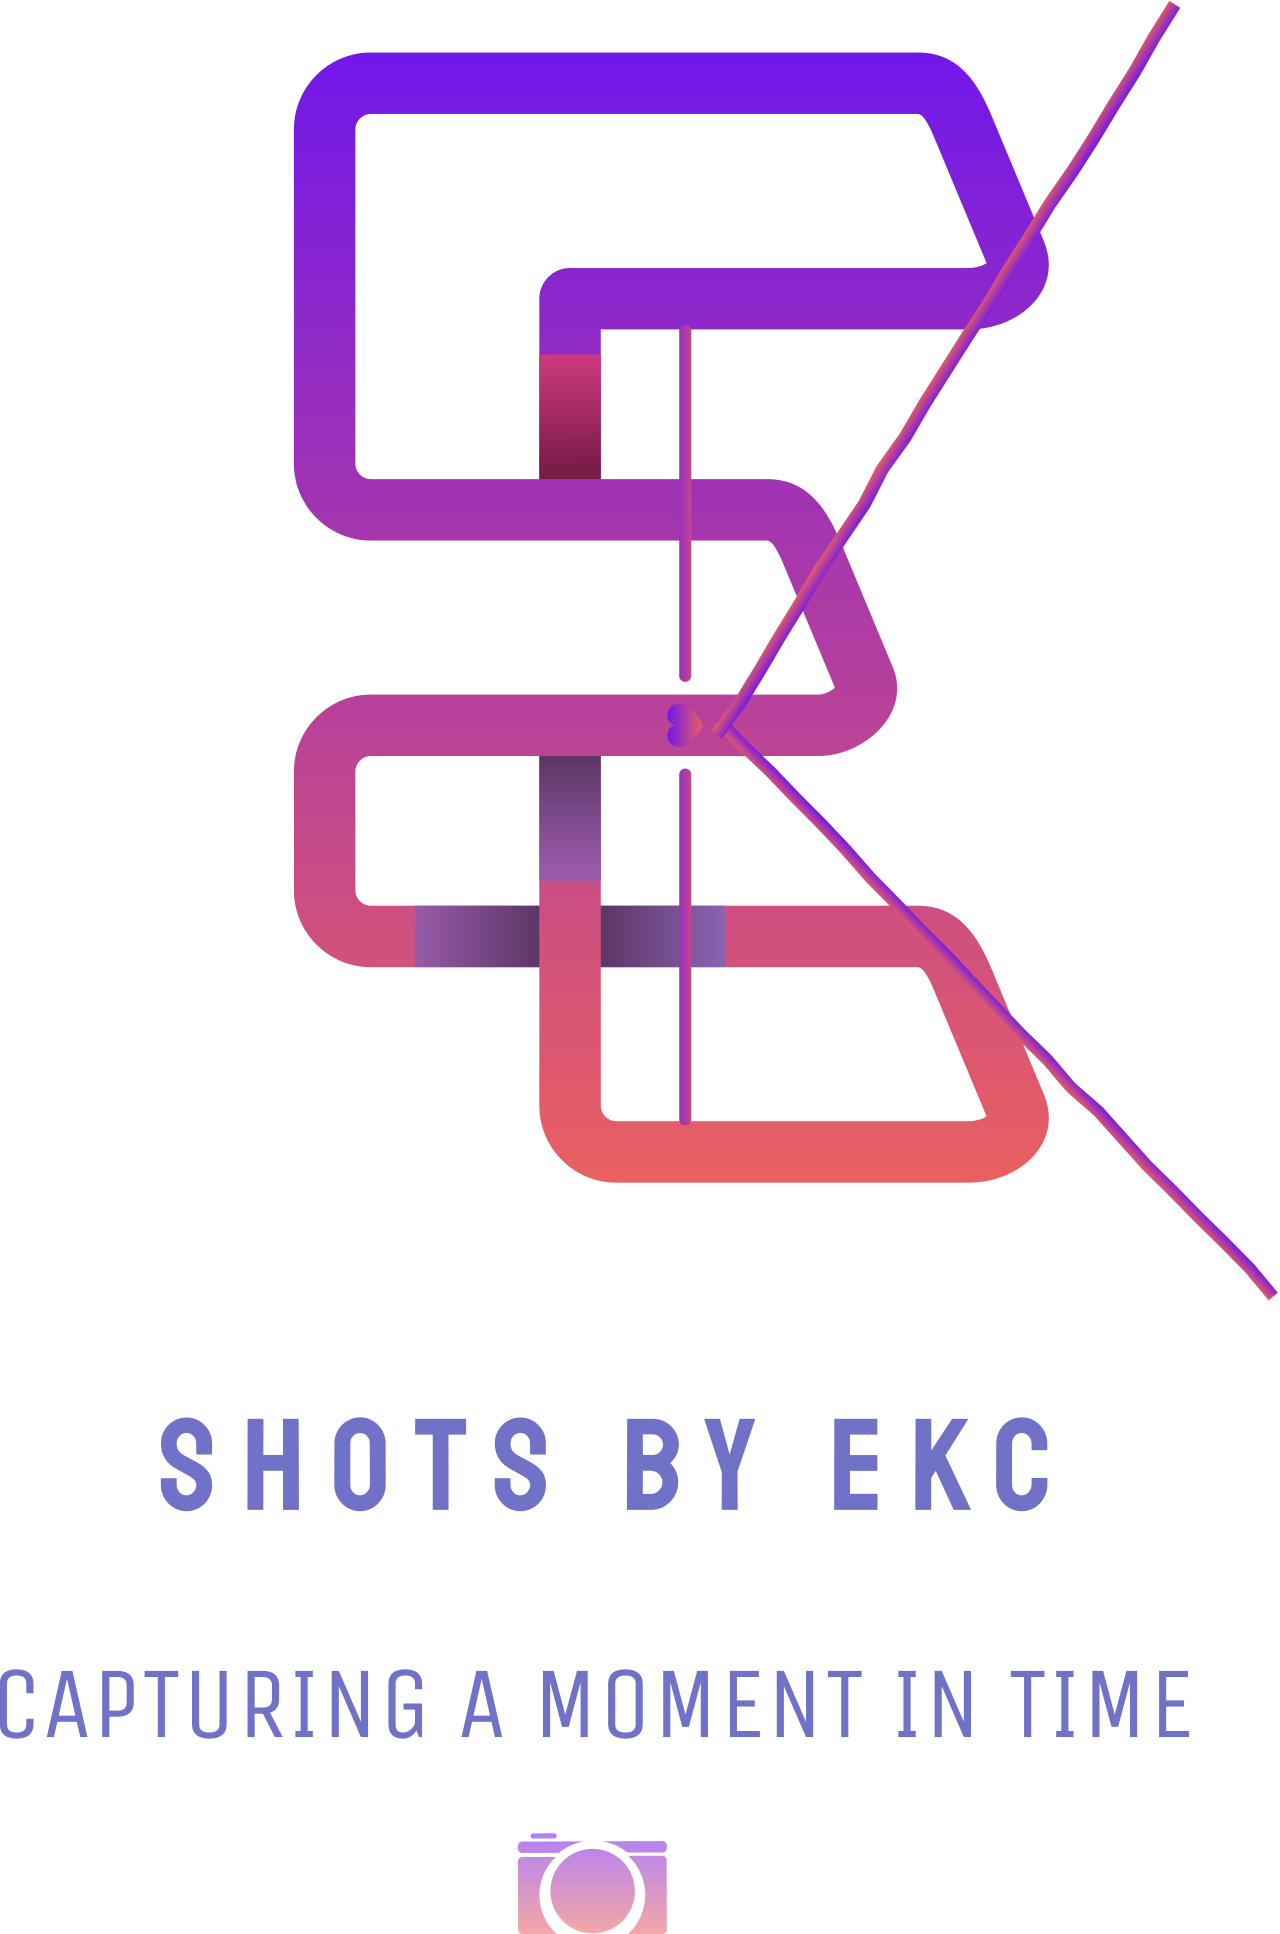 SHOTS BY EKC's web page